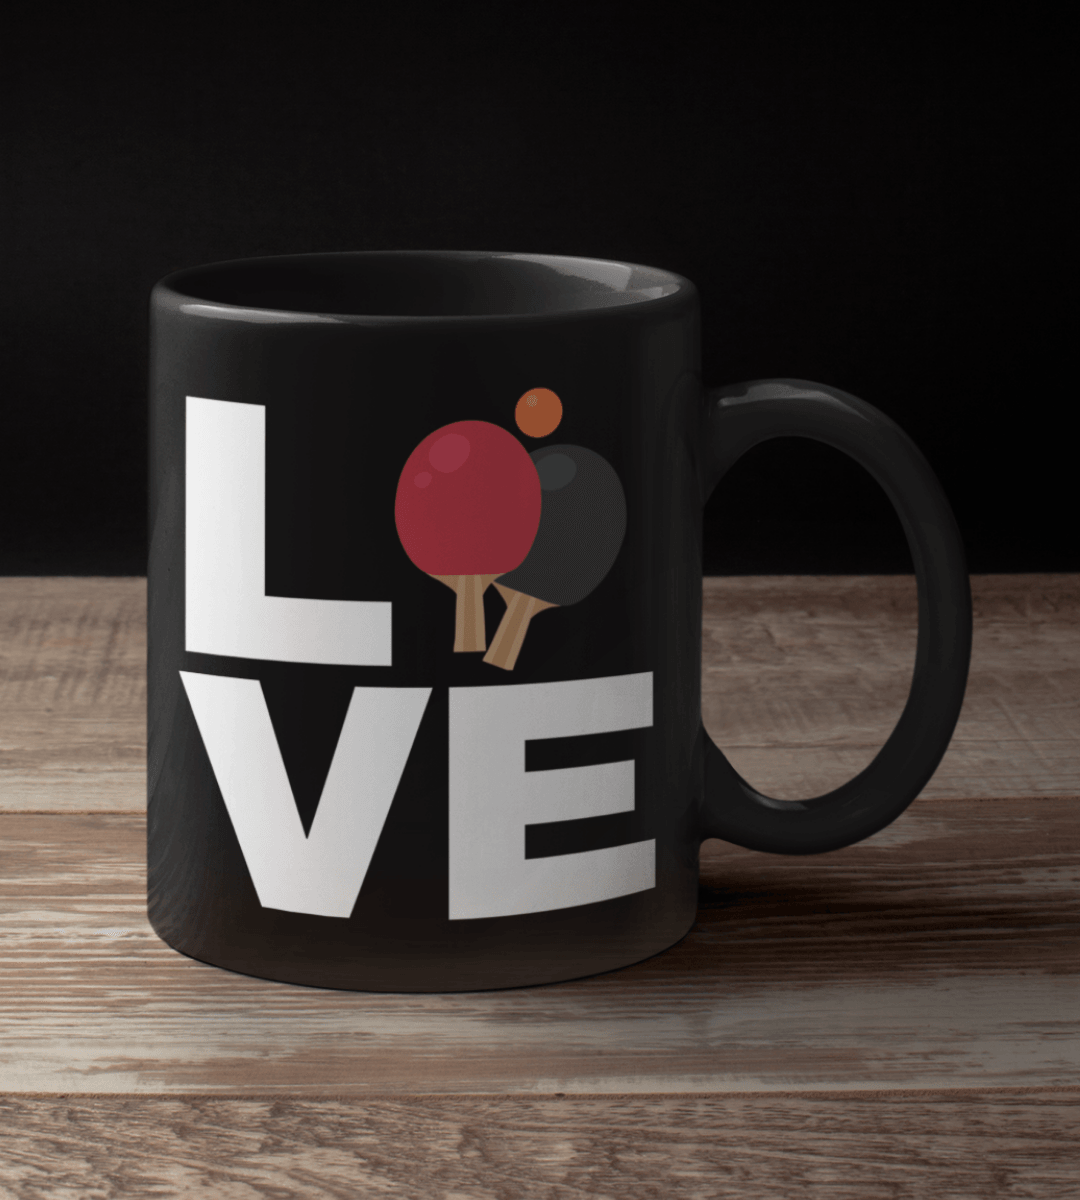 Love Table Tennis Black Mug - TheGivenGet